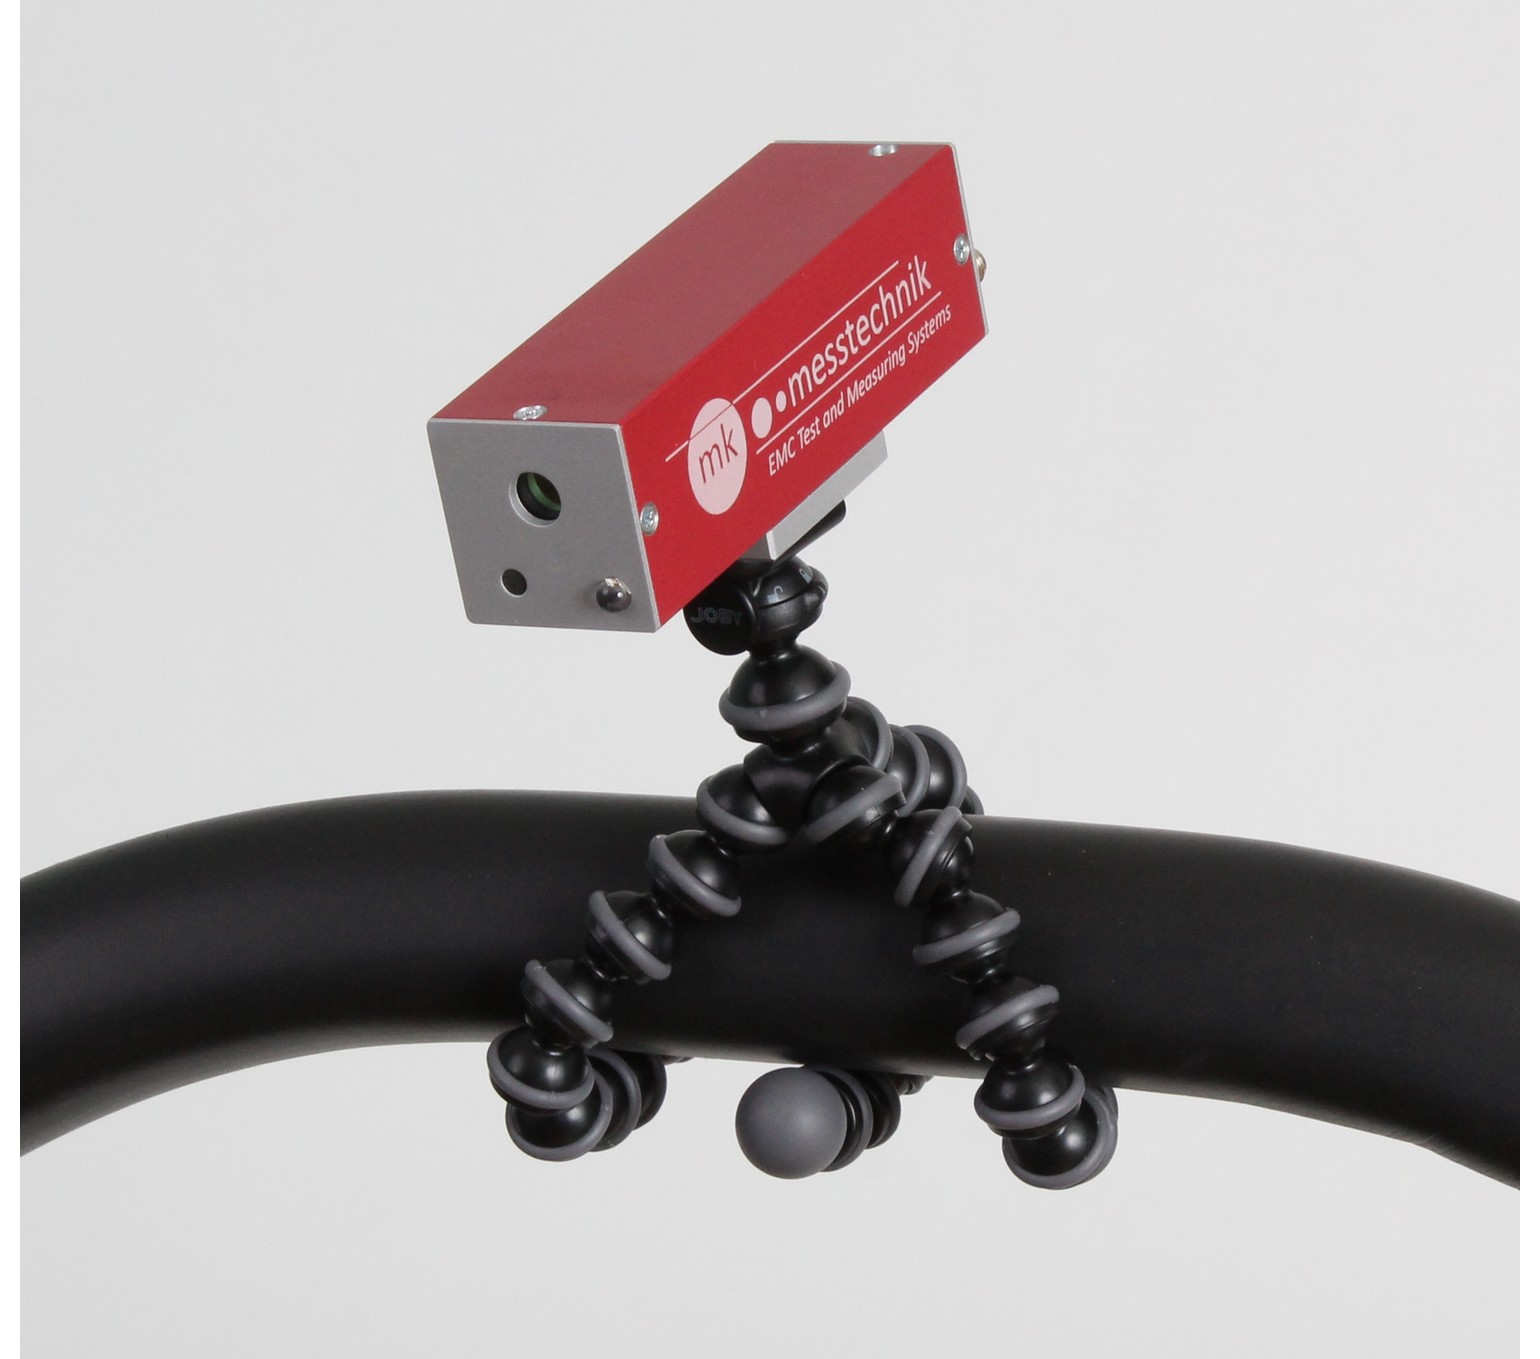 Micro camera mounted on Gorillapod